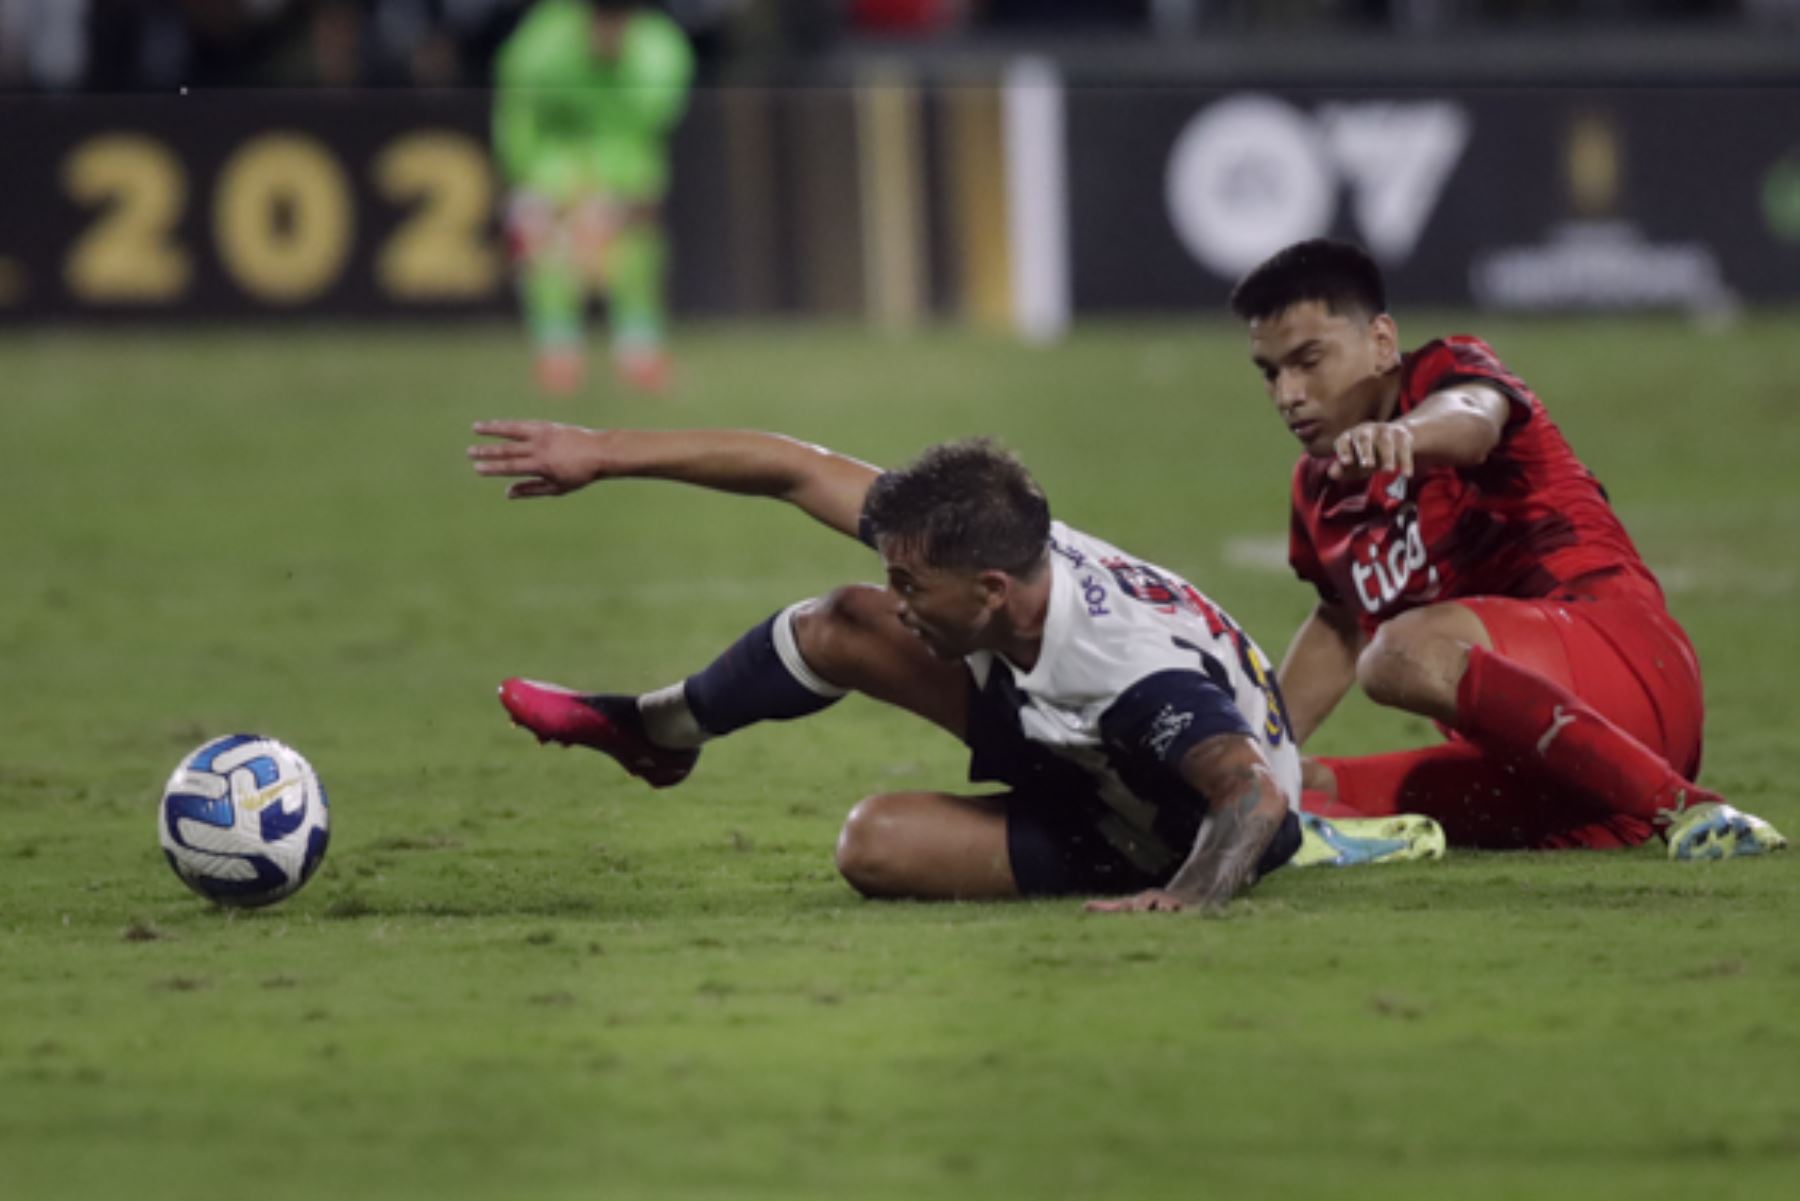 Gabriel Costa de Alianza Lima disputa el balón con un defensor de Libertad de Paraguay por la Copa Libertadores.

Foto: ANDINA/Juan Carlos Guzmán Negrini